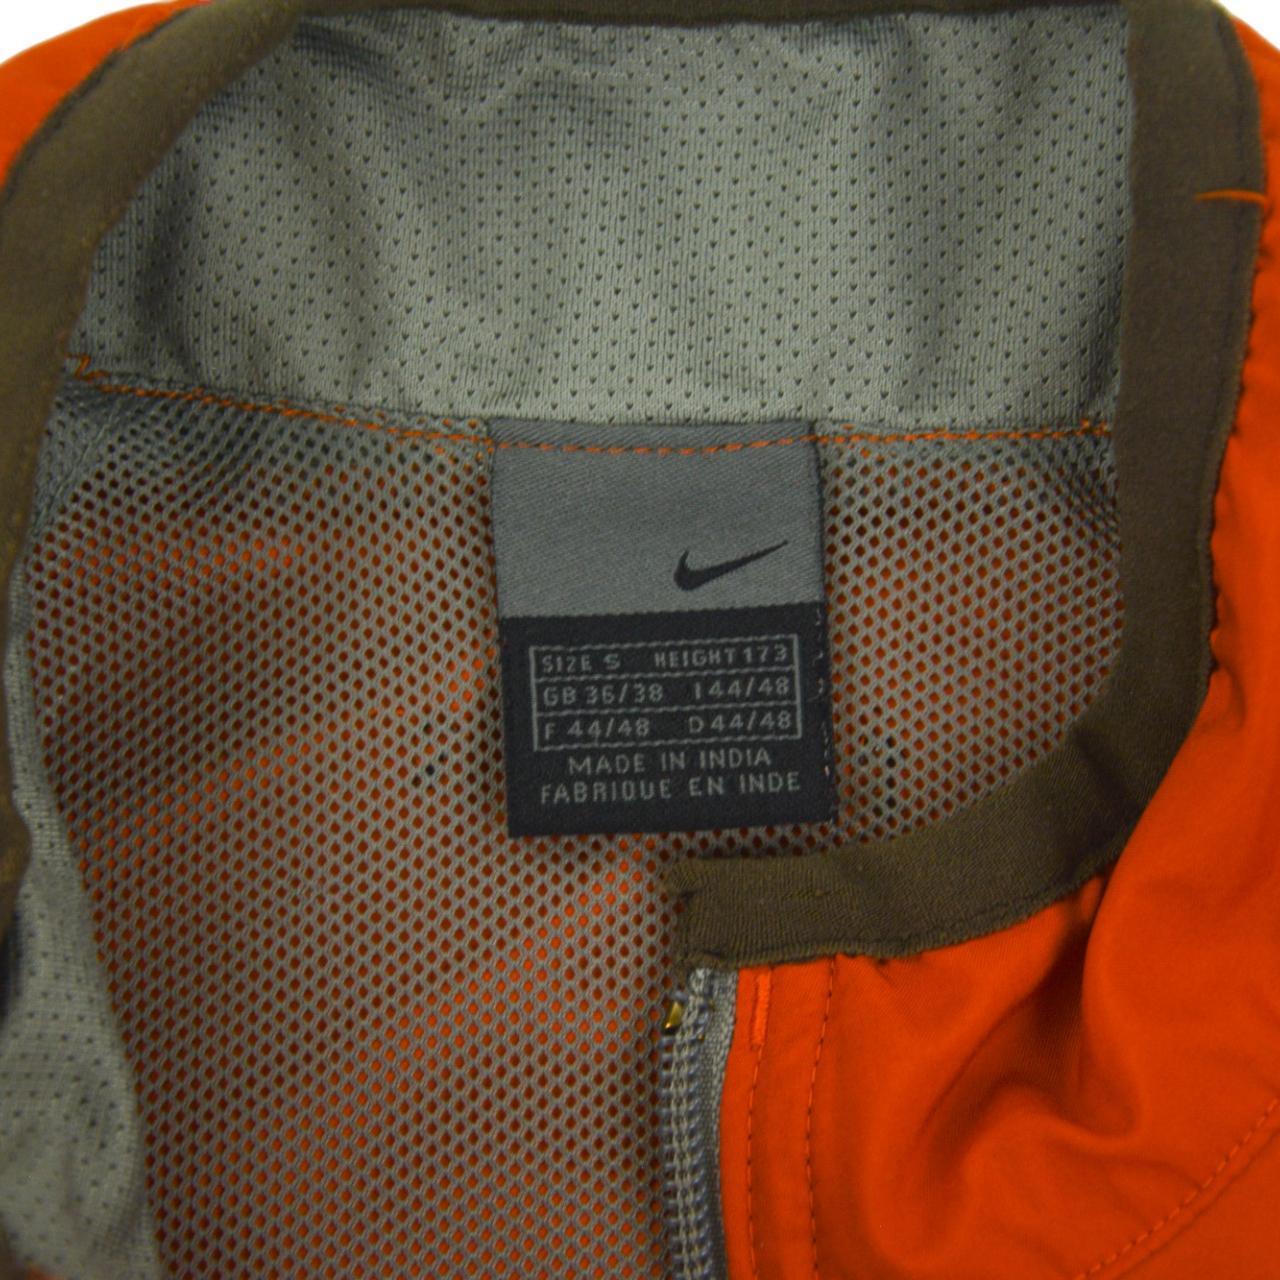 Vintage Nike Zip Up Vest Jacket Size S - Known Source